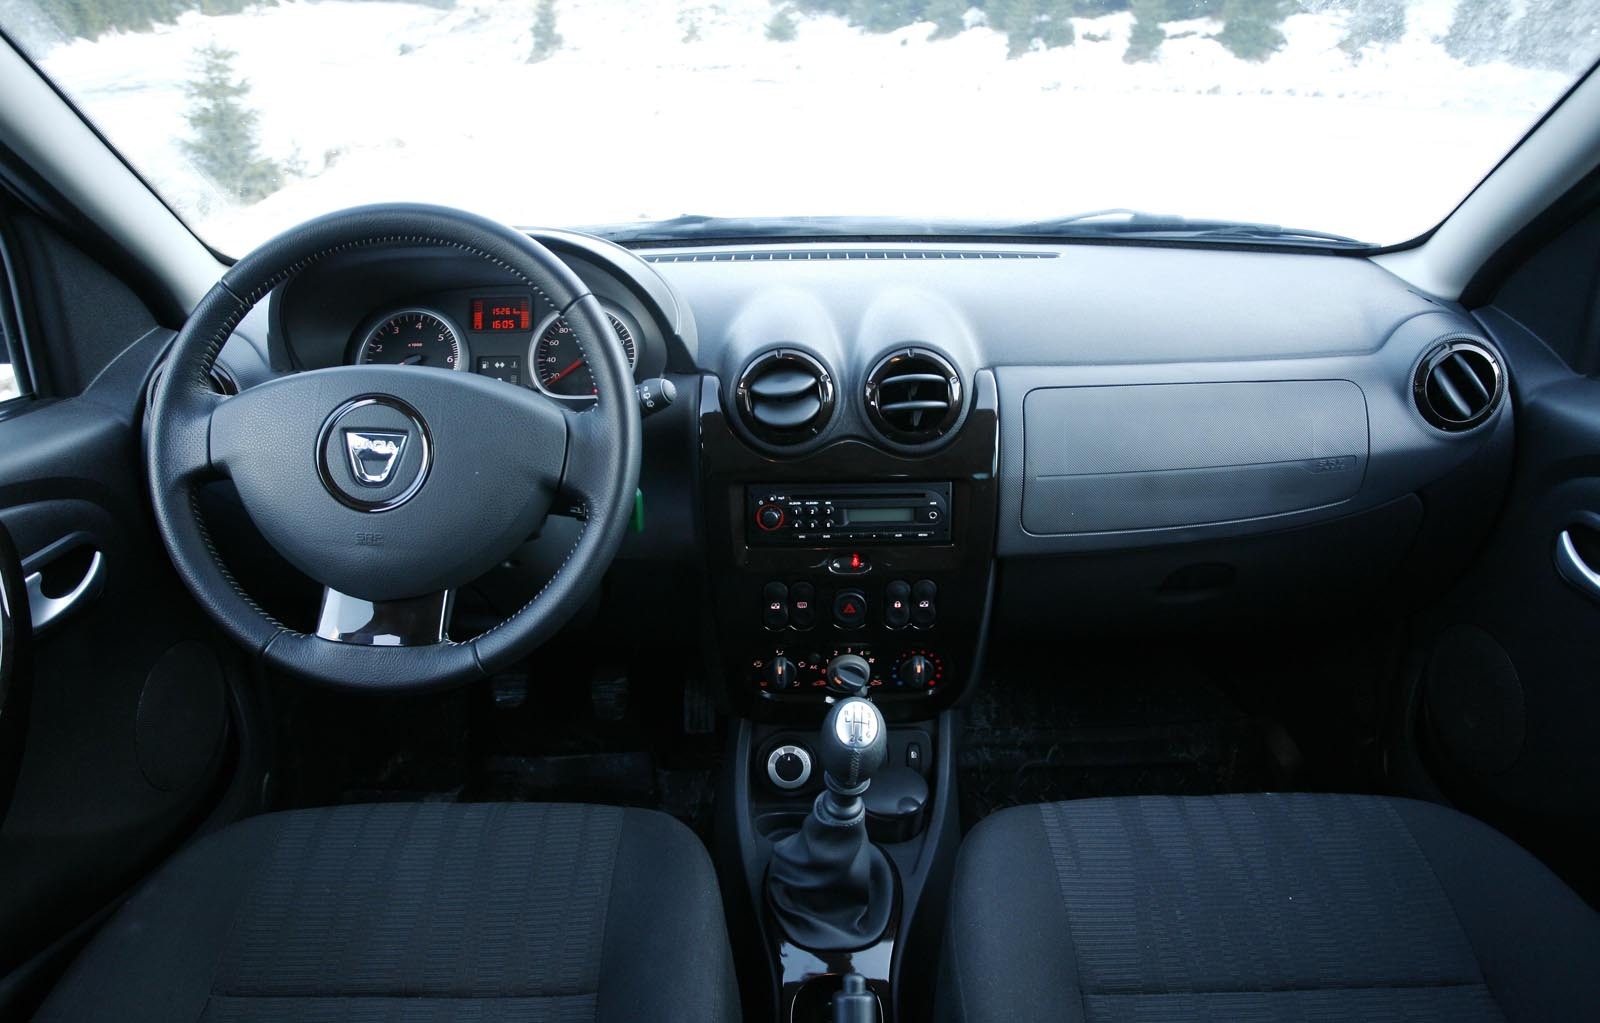 Dacia Duster are un interior in stil Logan: fara pretentii, dar cu dotari suficiente